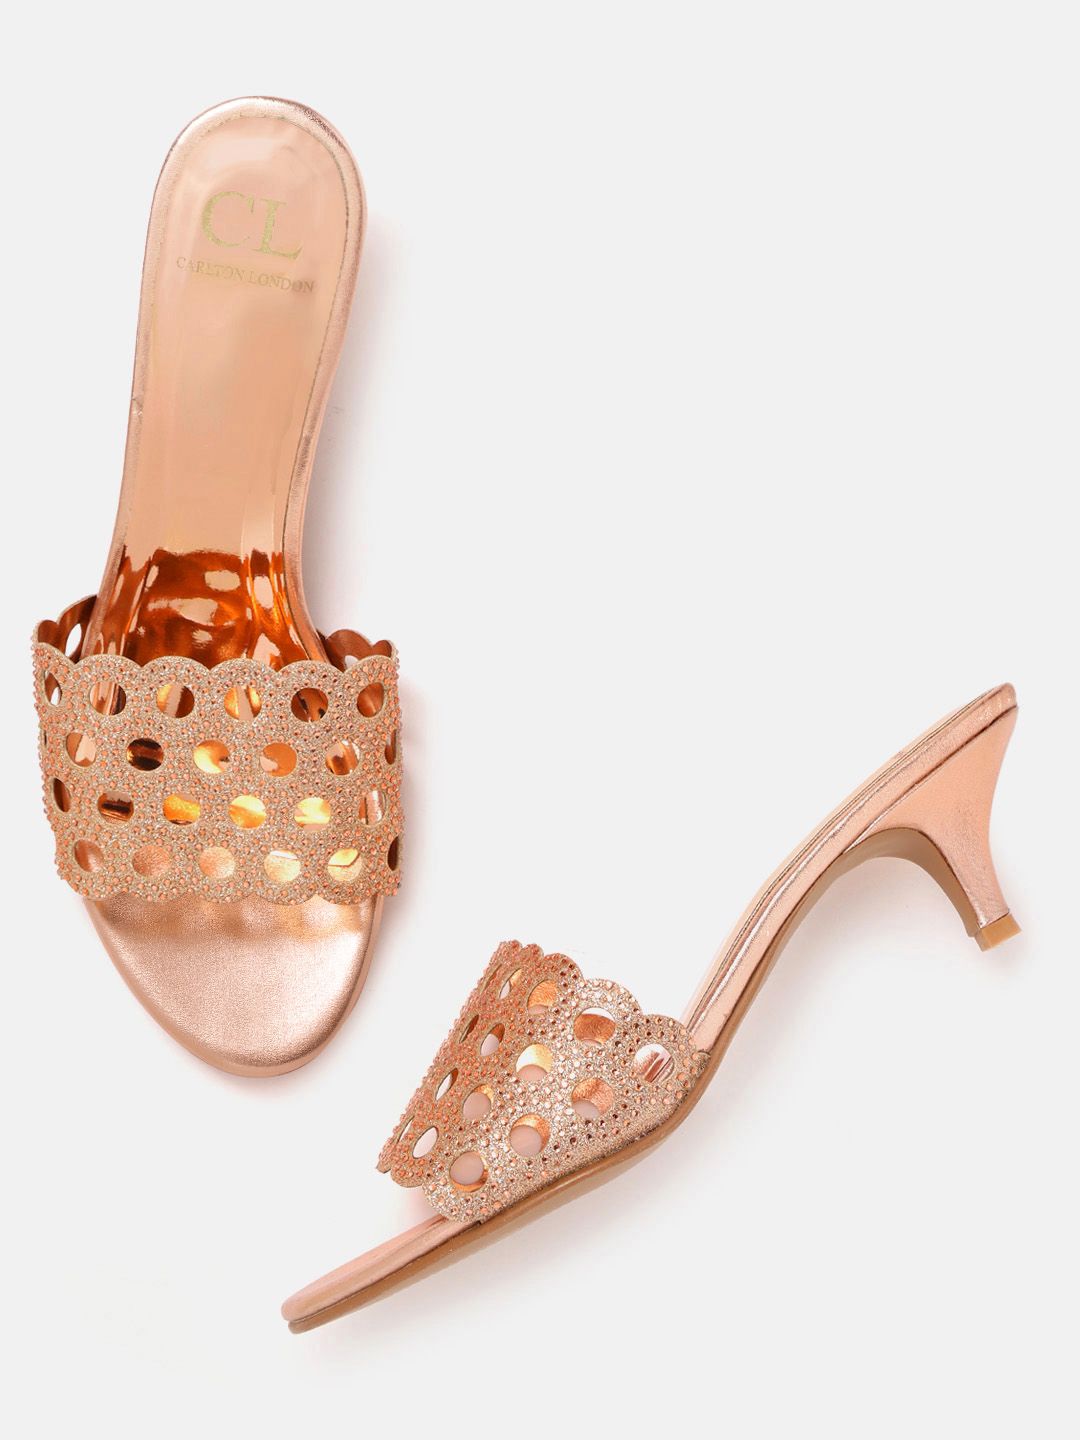 Carlton London Rose Gold-Toned Embellished Kitten Heels with Cut Work Detail Price in India